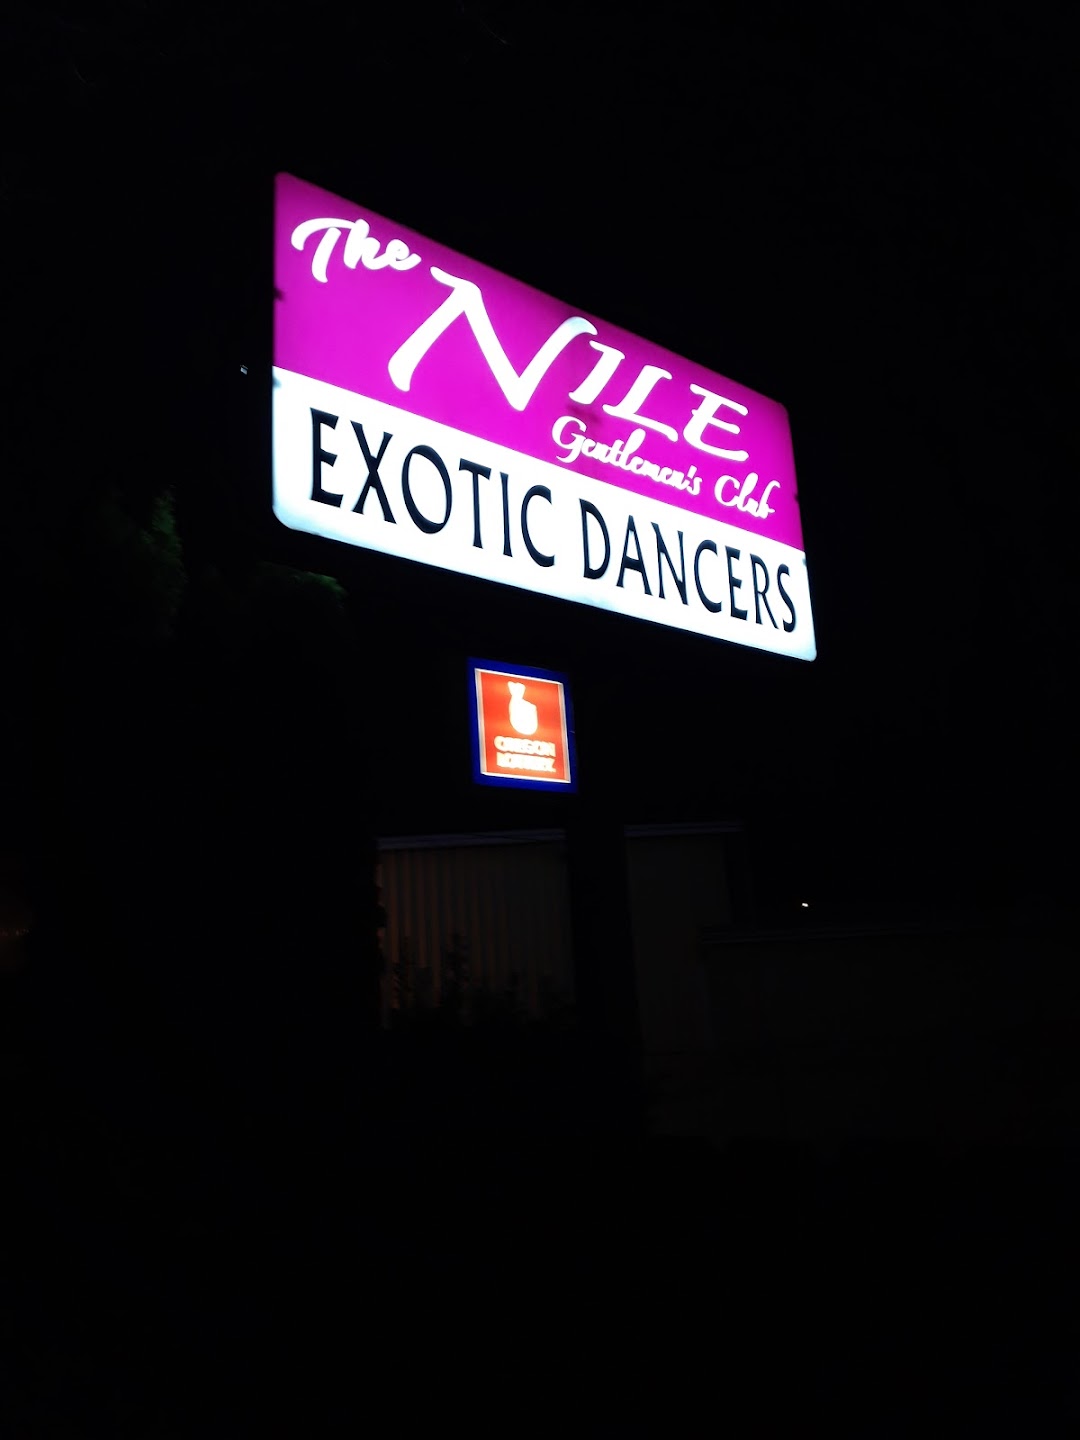 The Nile Gentlemens Club